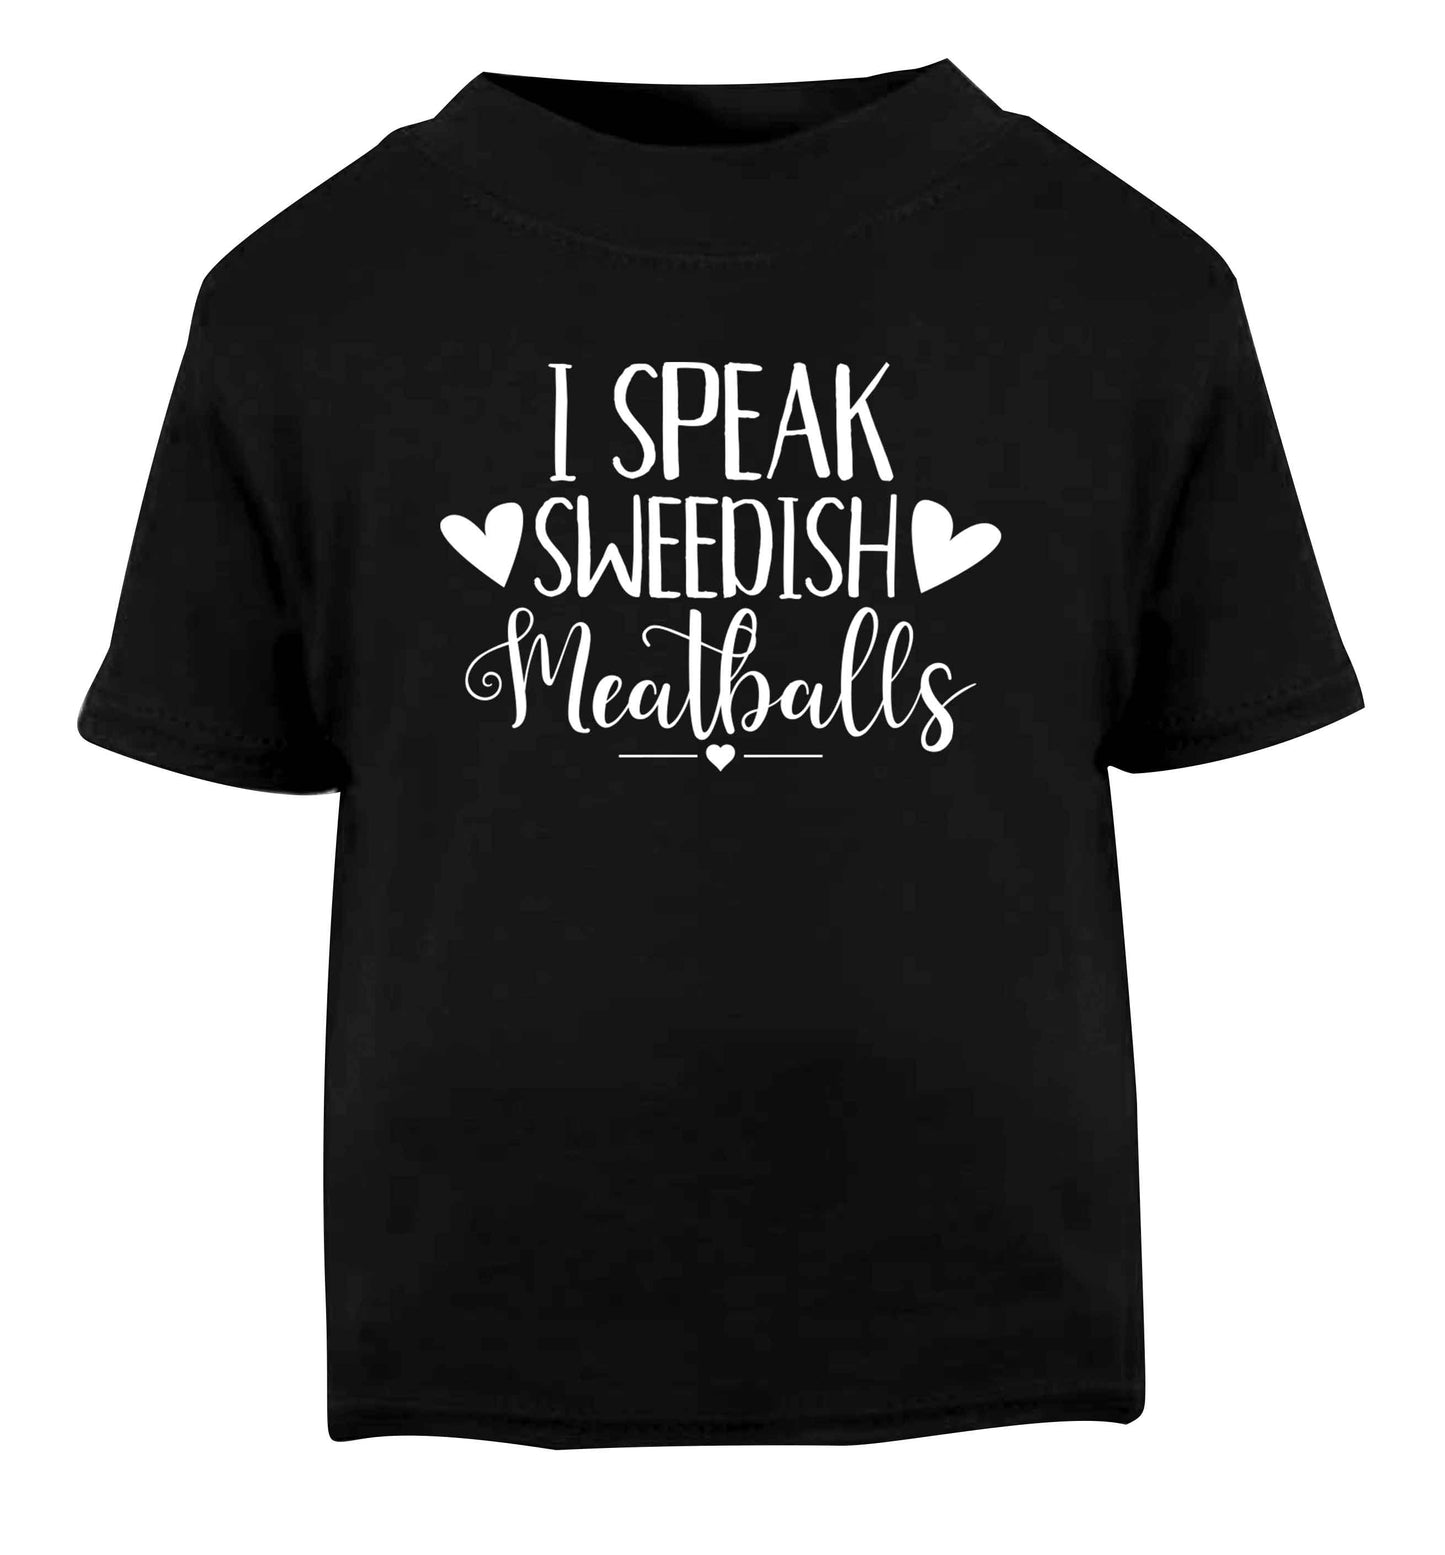 I speak sweedish...meatballs Black Baby Toddler Tshirt 2 years